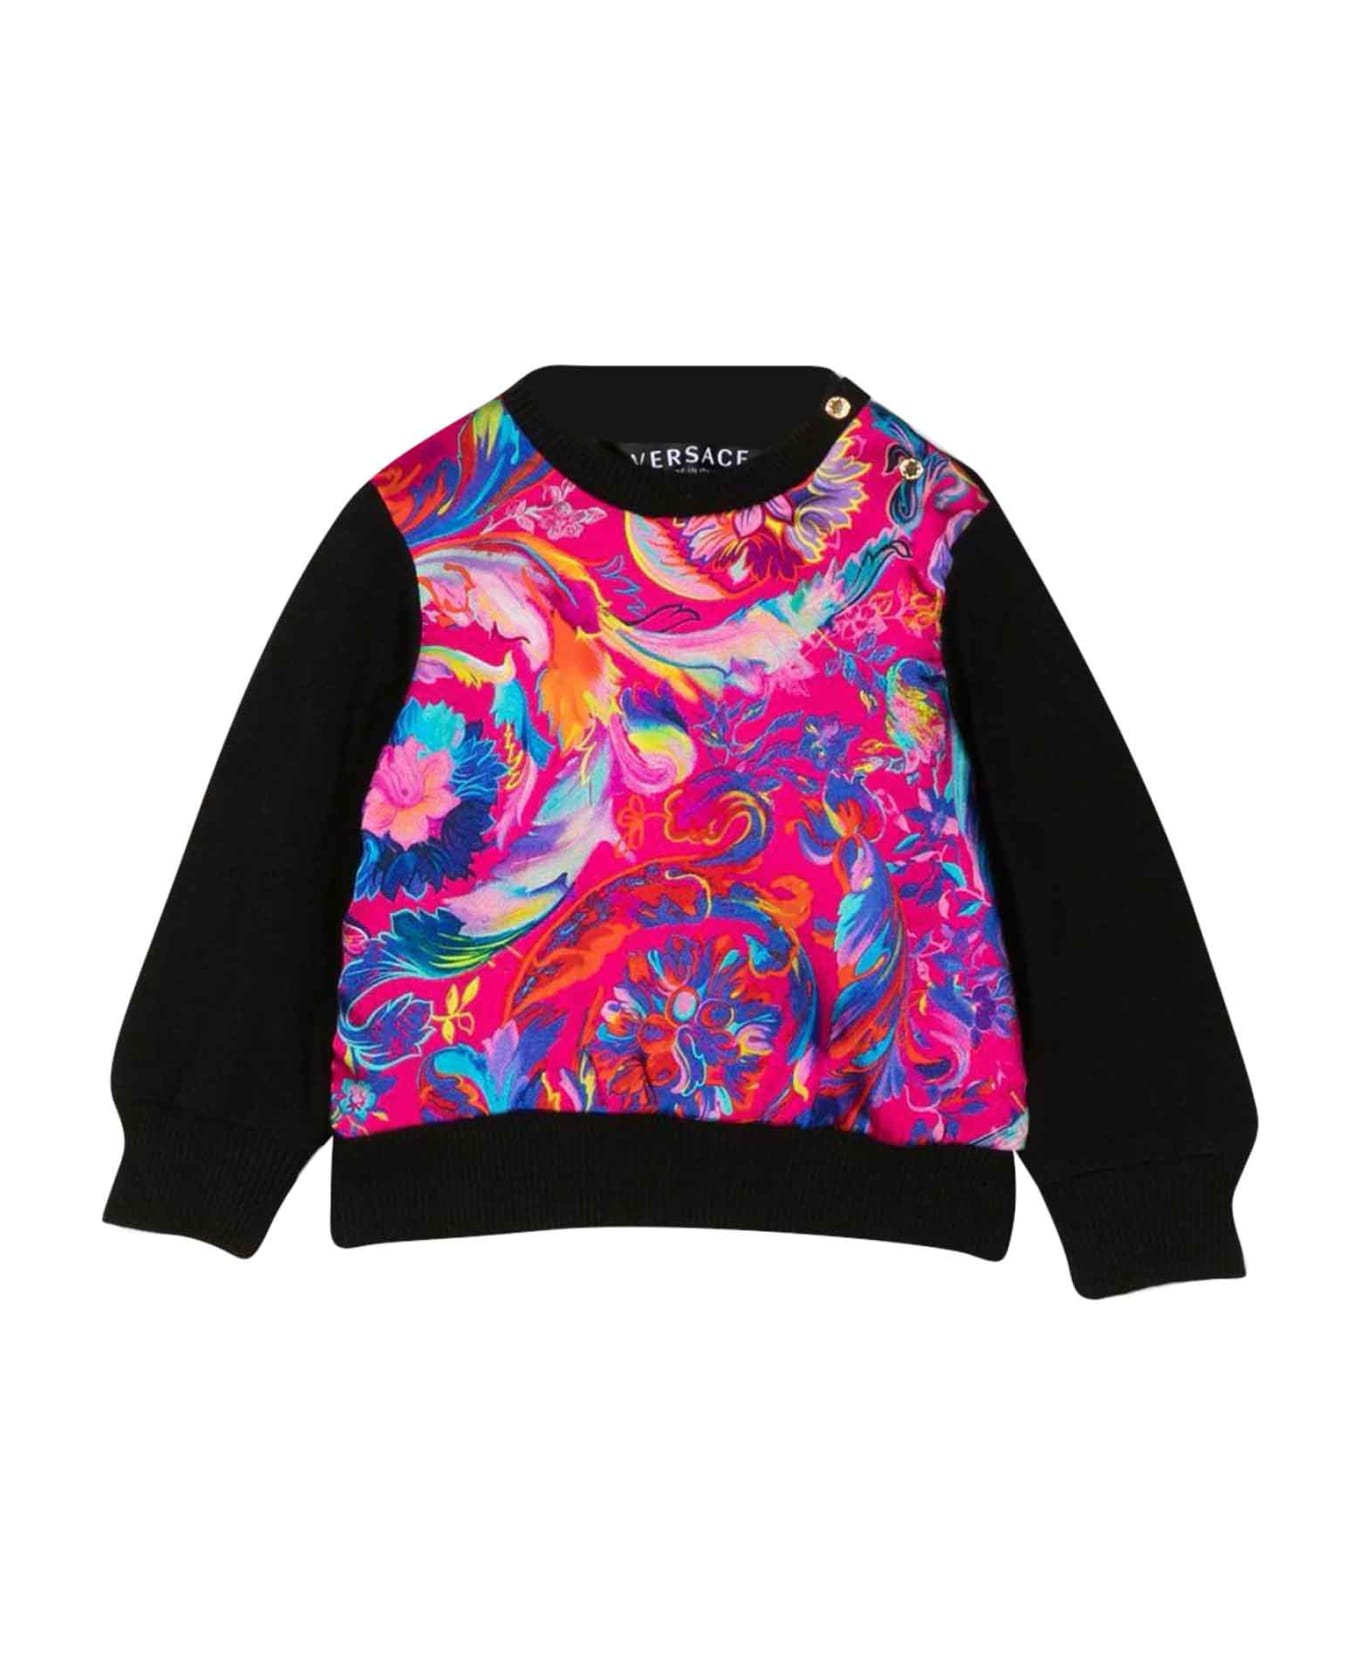 Versace Black Sweatshirt Unisex Kids. - Fucsia/nero